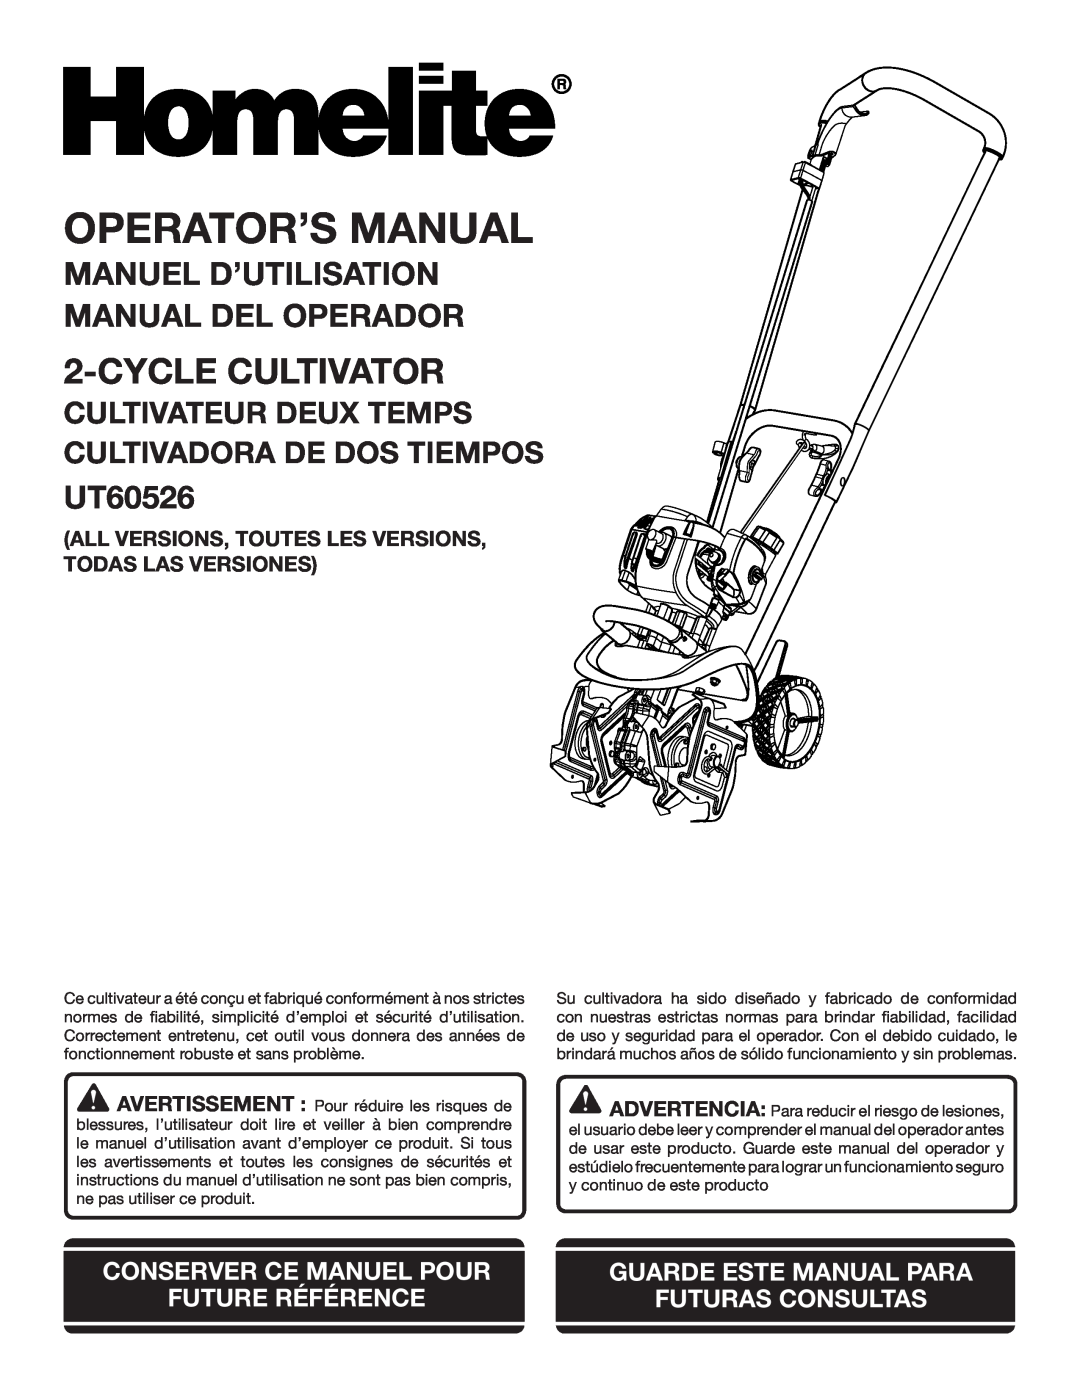 Homelite UT60526 manuel dutilisation cycle cultivator, Manuel D’Utilisation Manual Del Operador, Operator’S Manual 